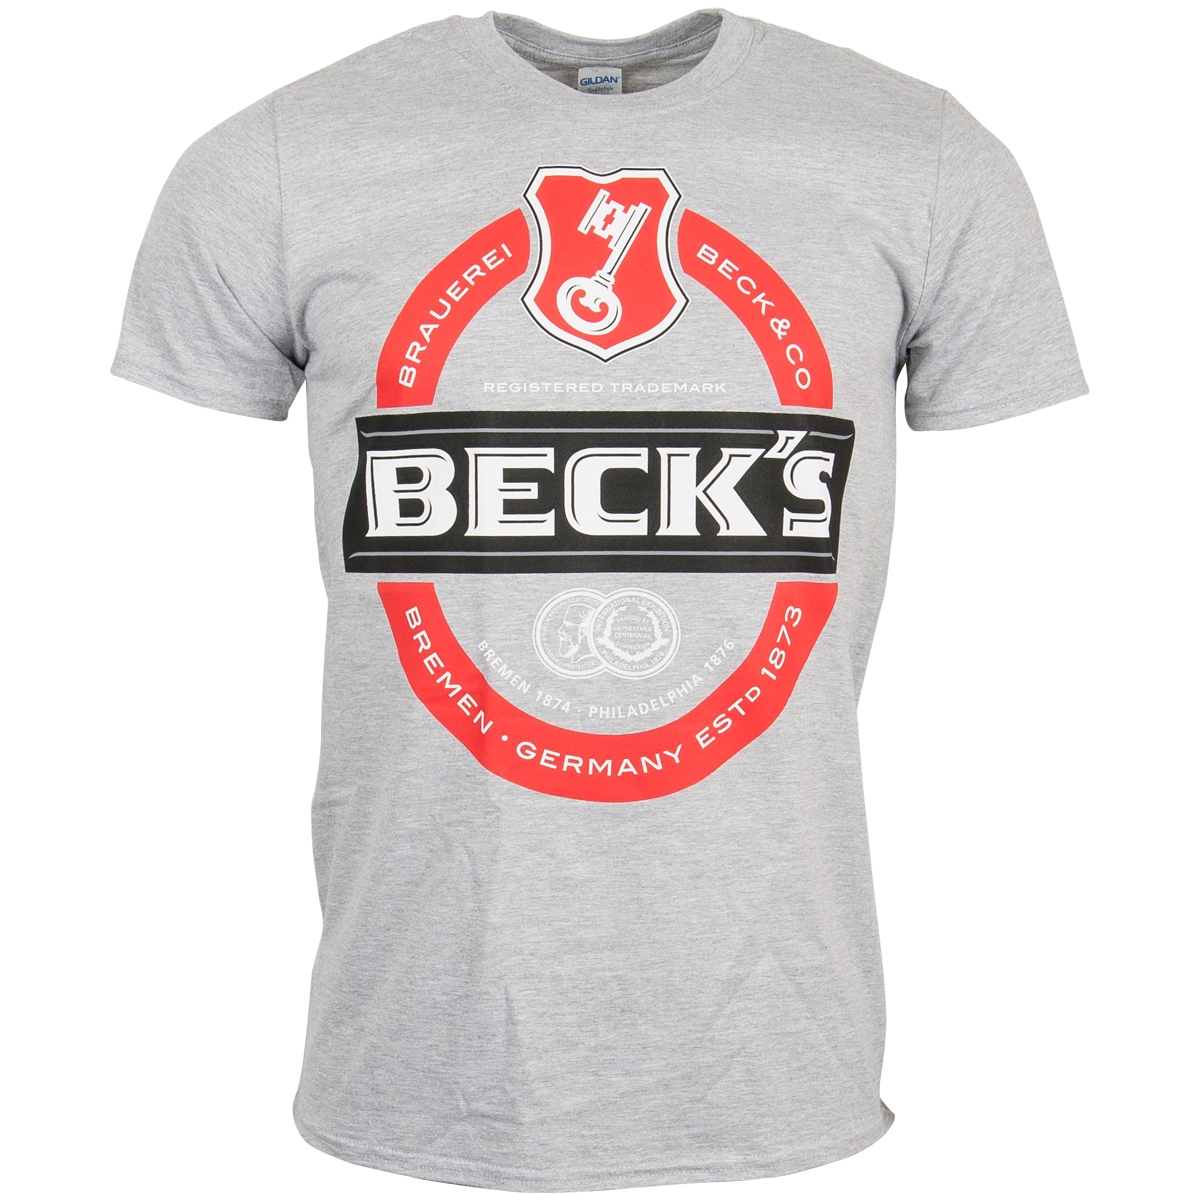 Beck's - Label Logo T-Shirt - grey 